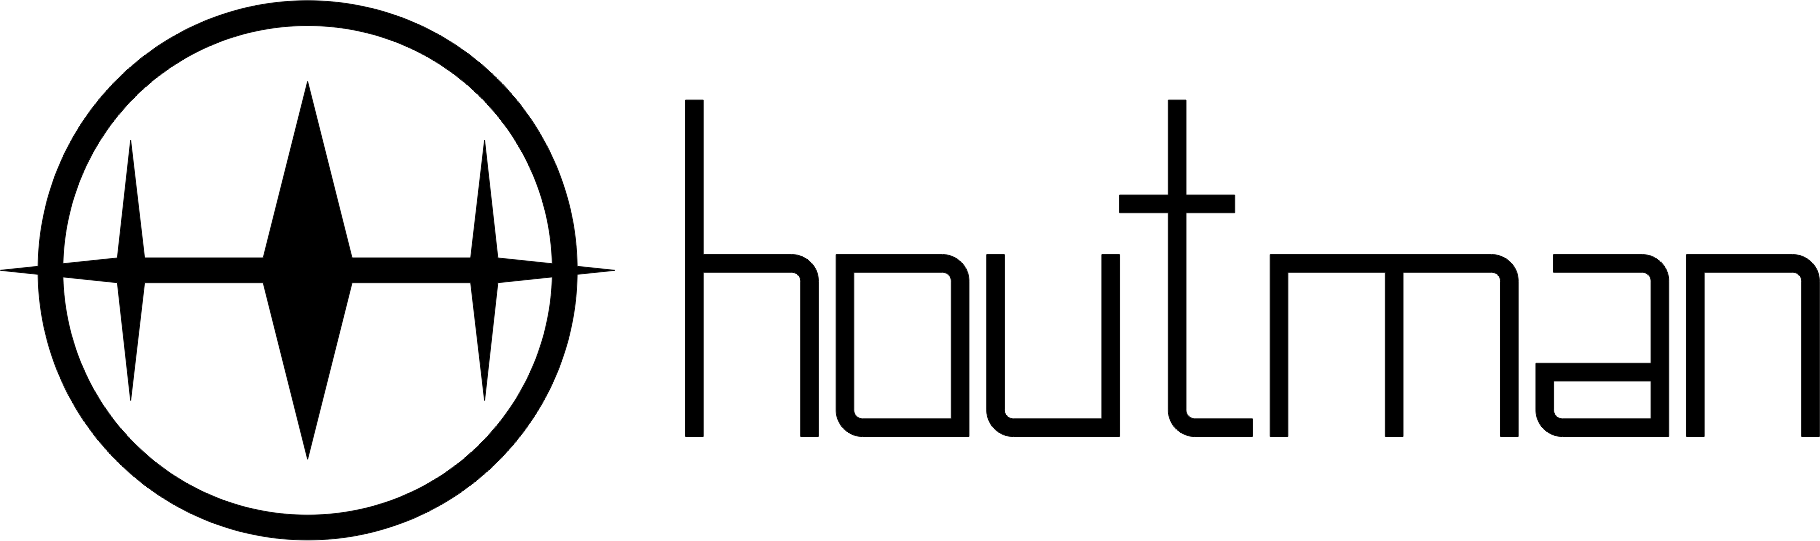 Houtman Watches Logo in black